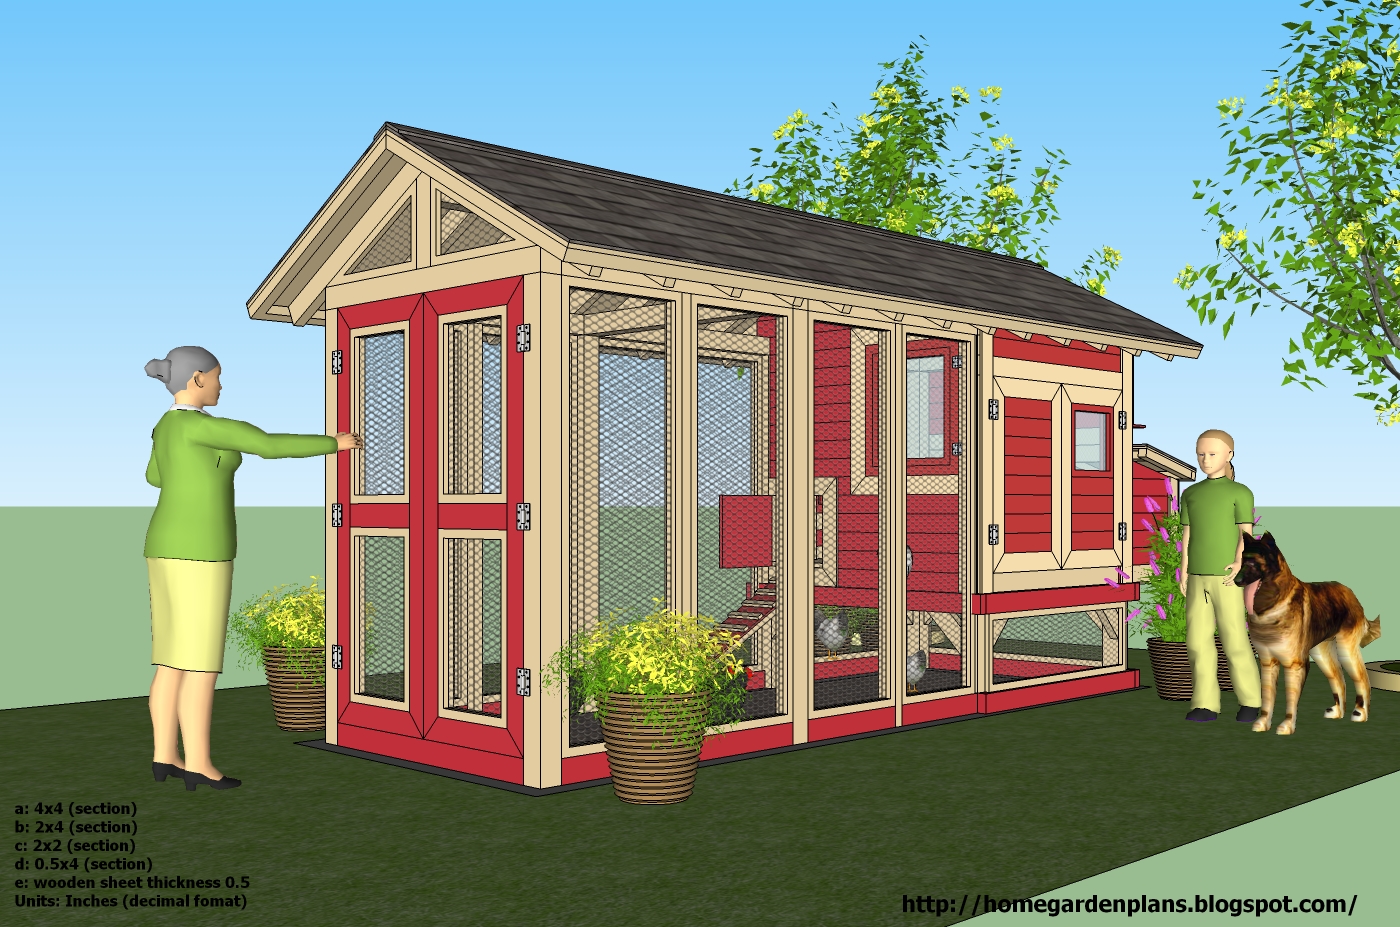  garden plans: M102 - Chicken Coop Plans - How to Build A Chicken Coop